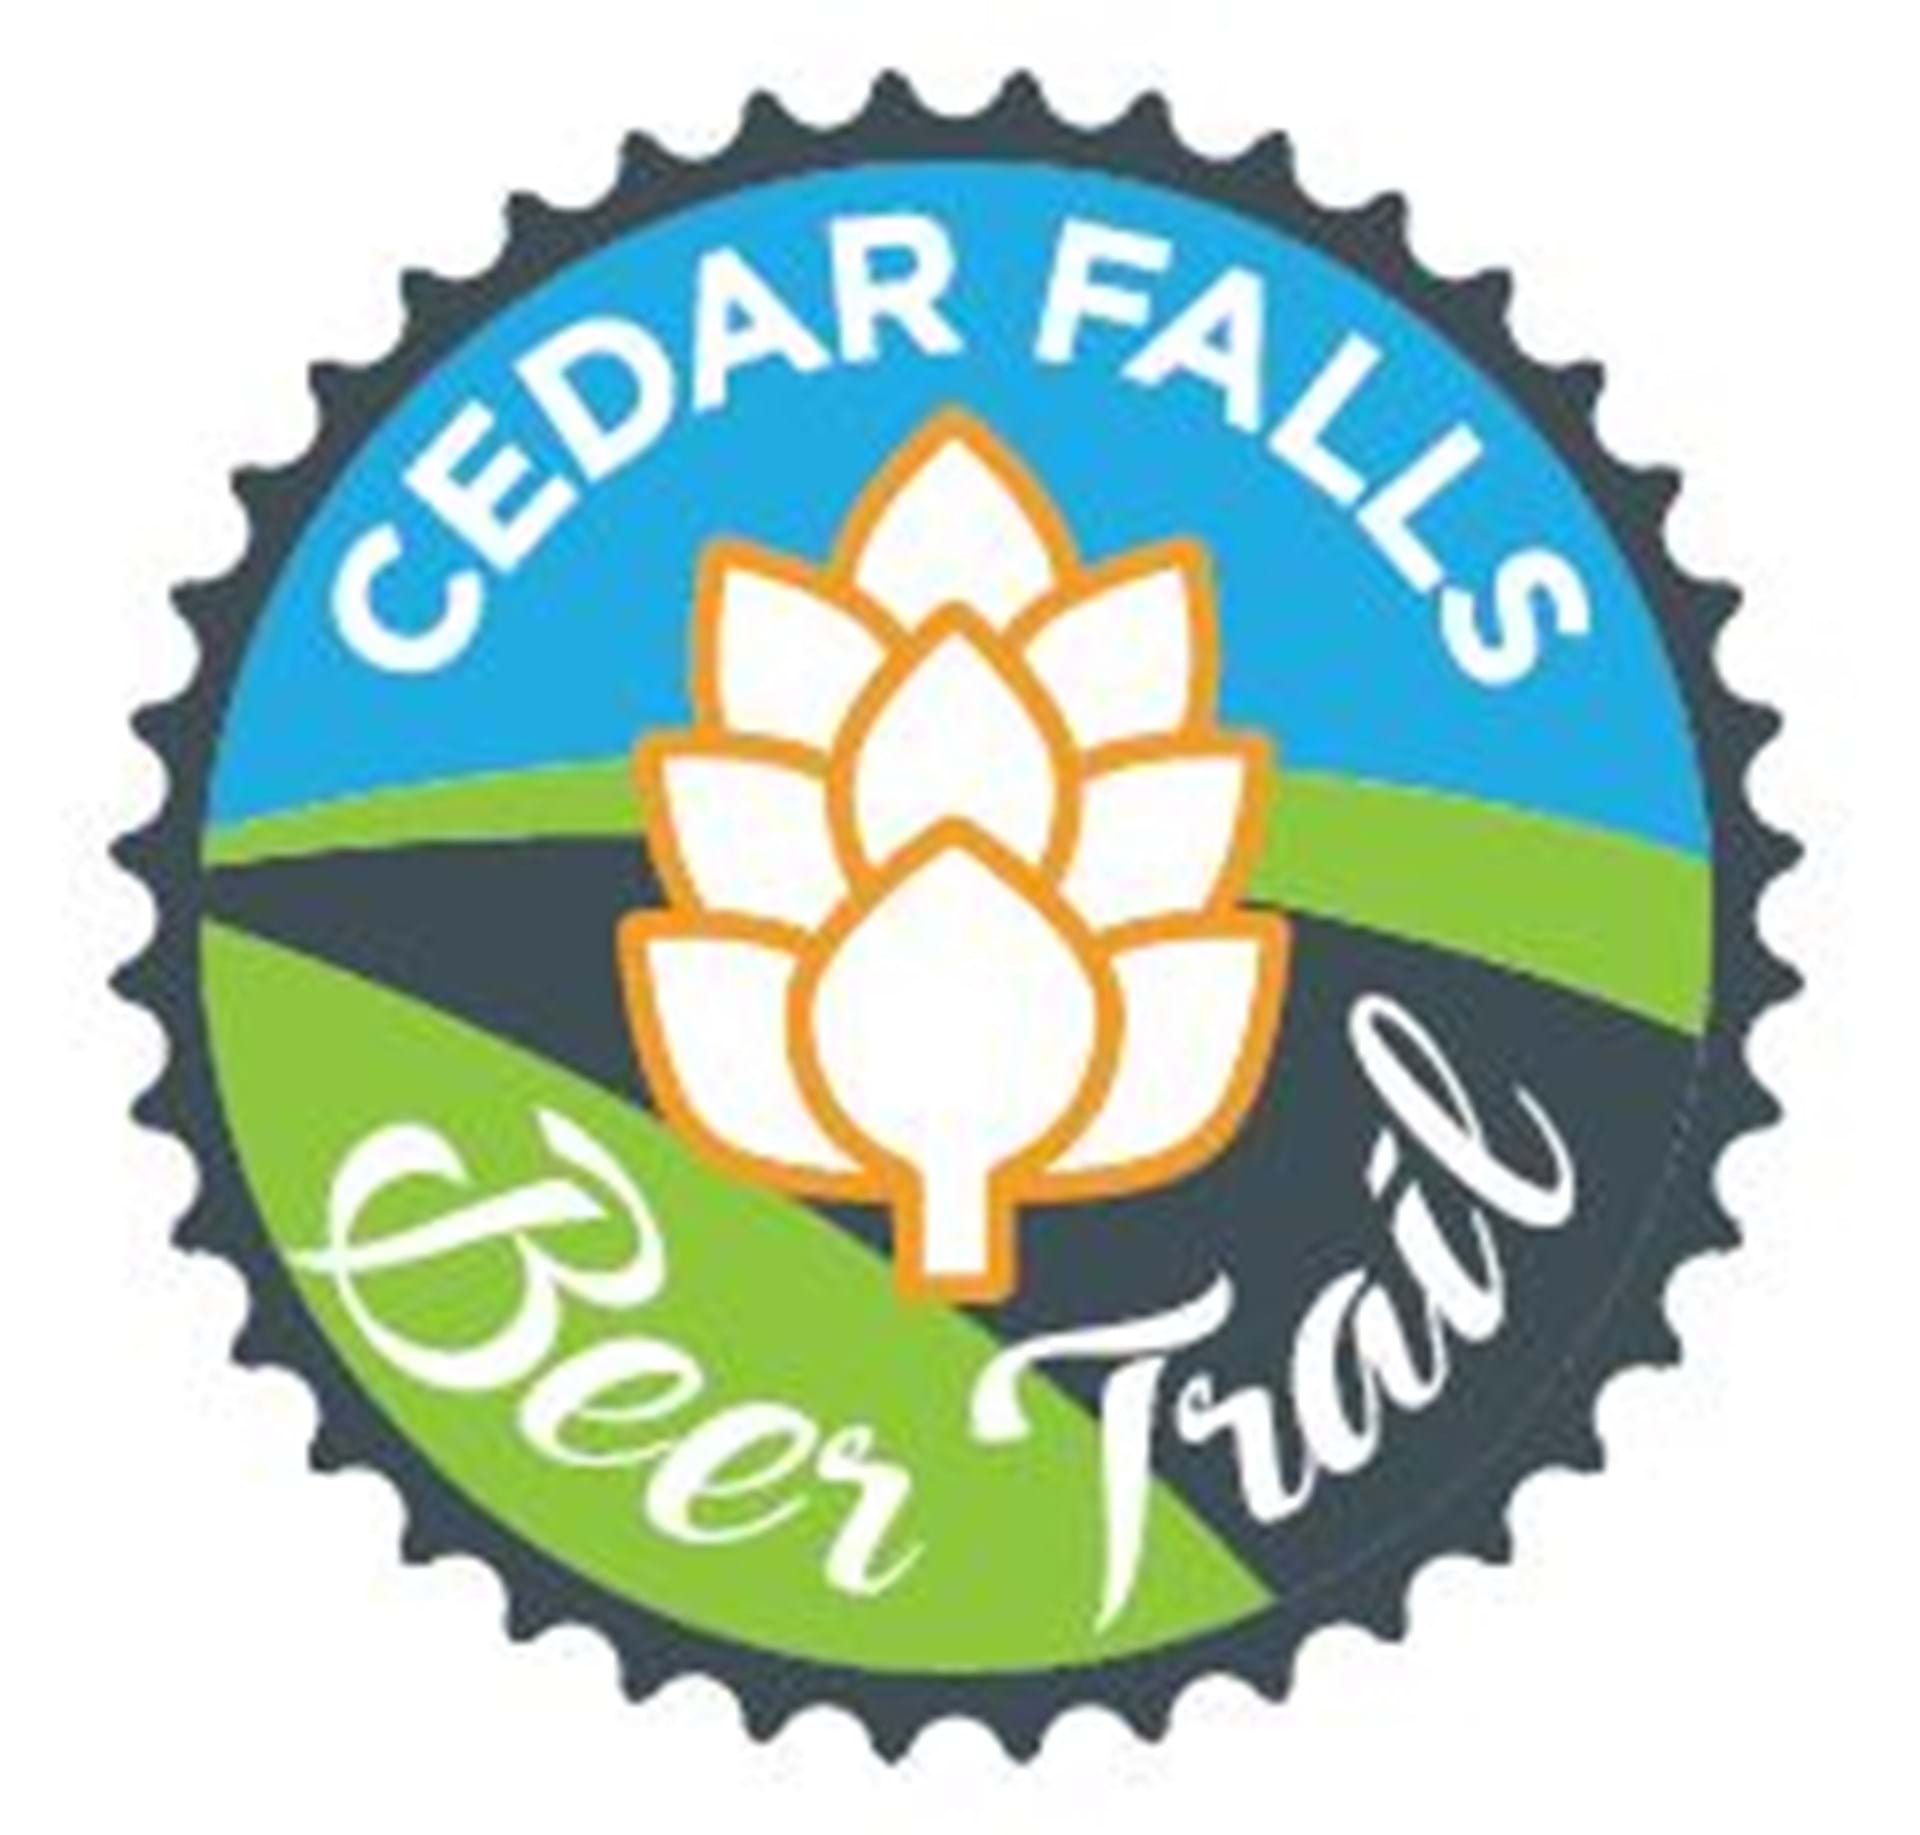 Beer Trail Logo